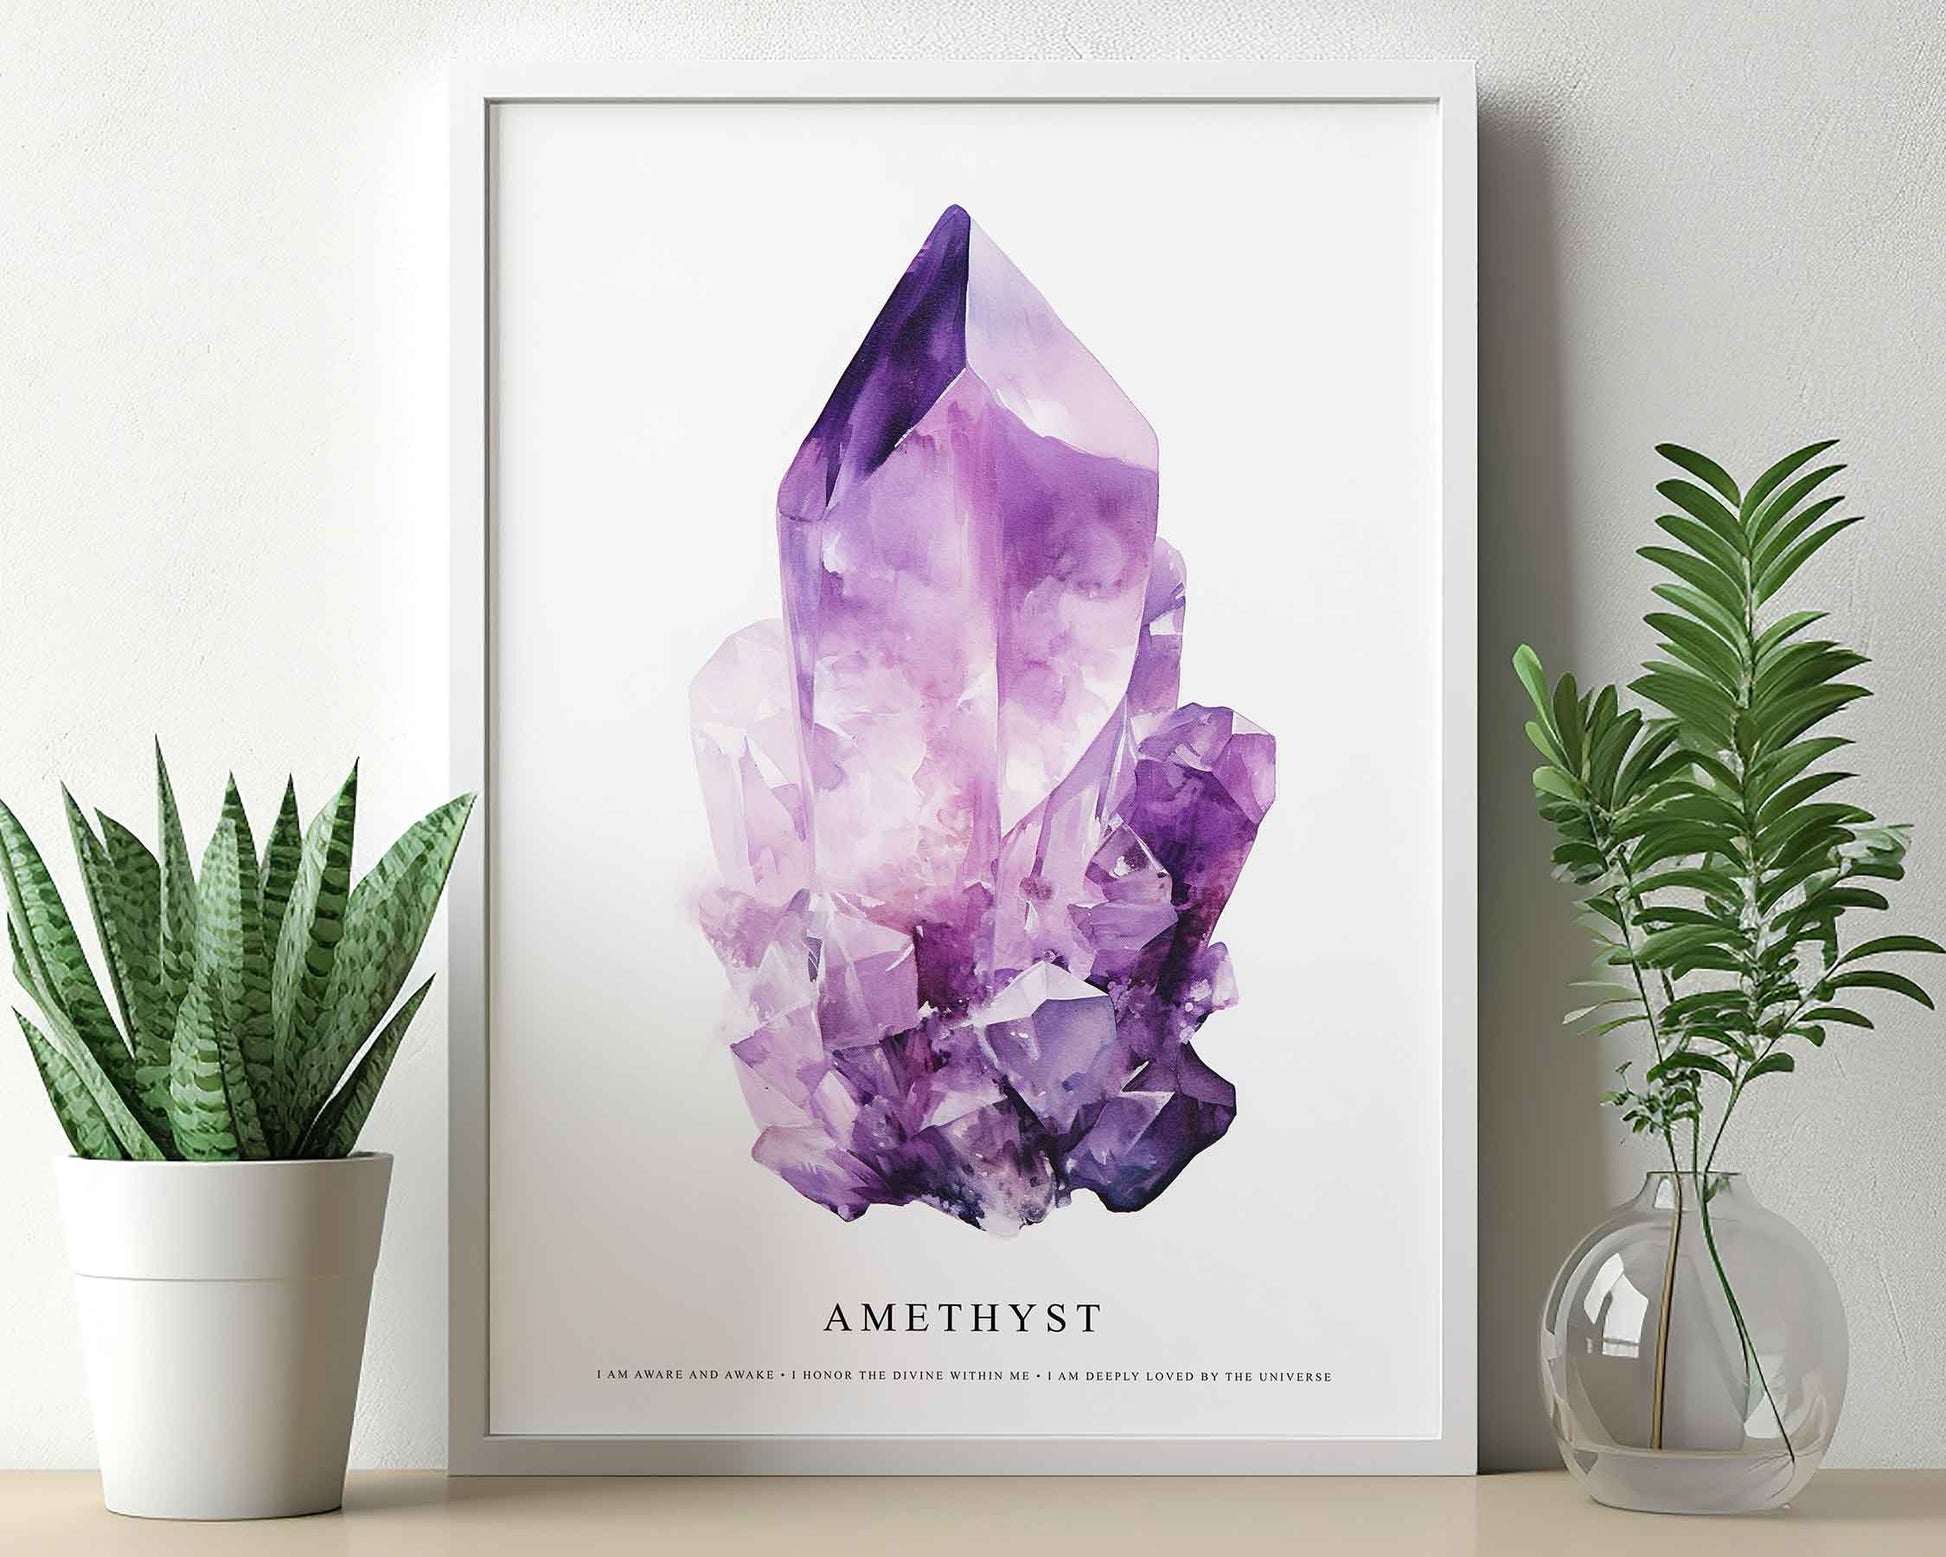 Framed Image of Amethyst Gemstone Affirmations Spiritual Crystal Manifestation Wall Art Prints